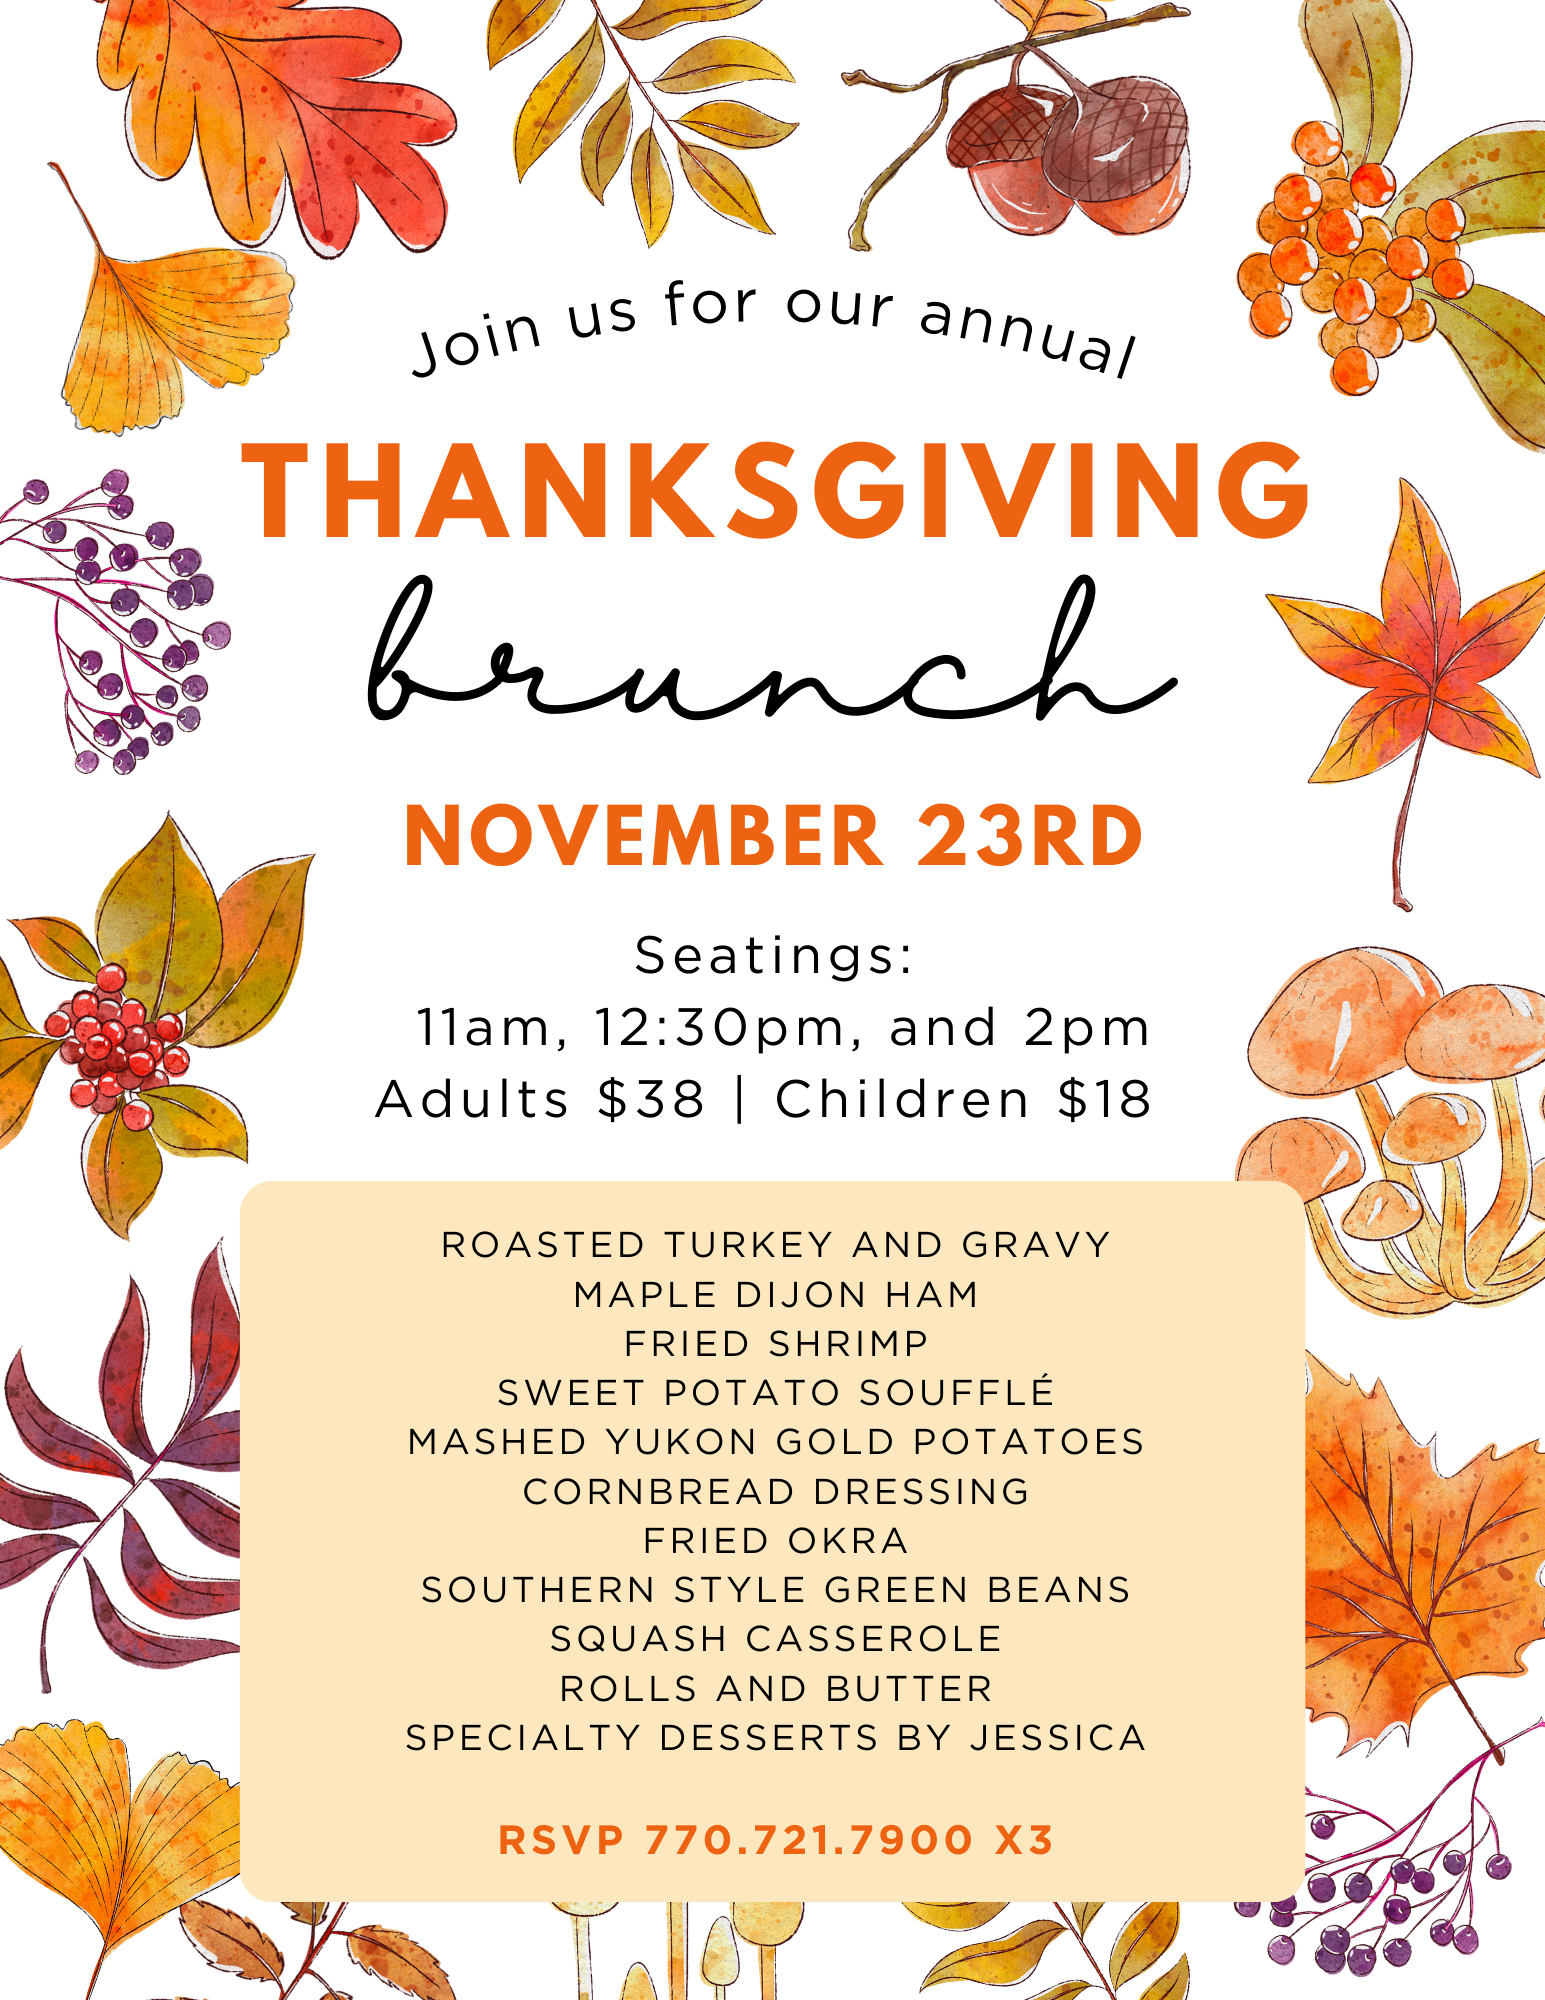 Thanksgiving Brunch November 23rd